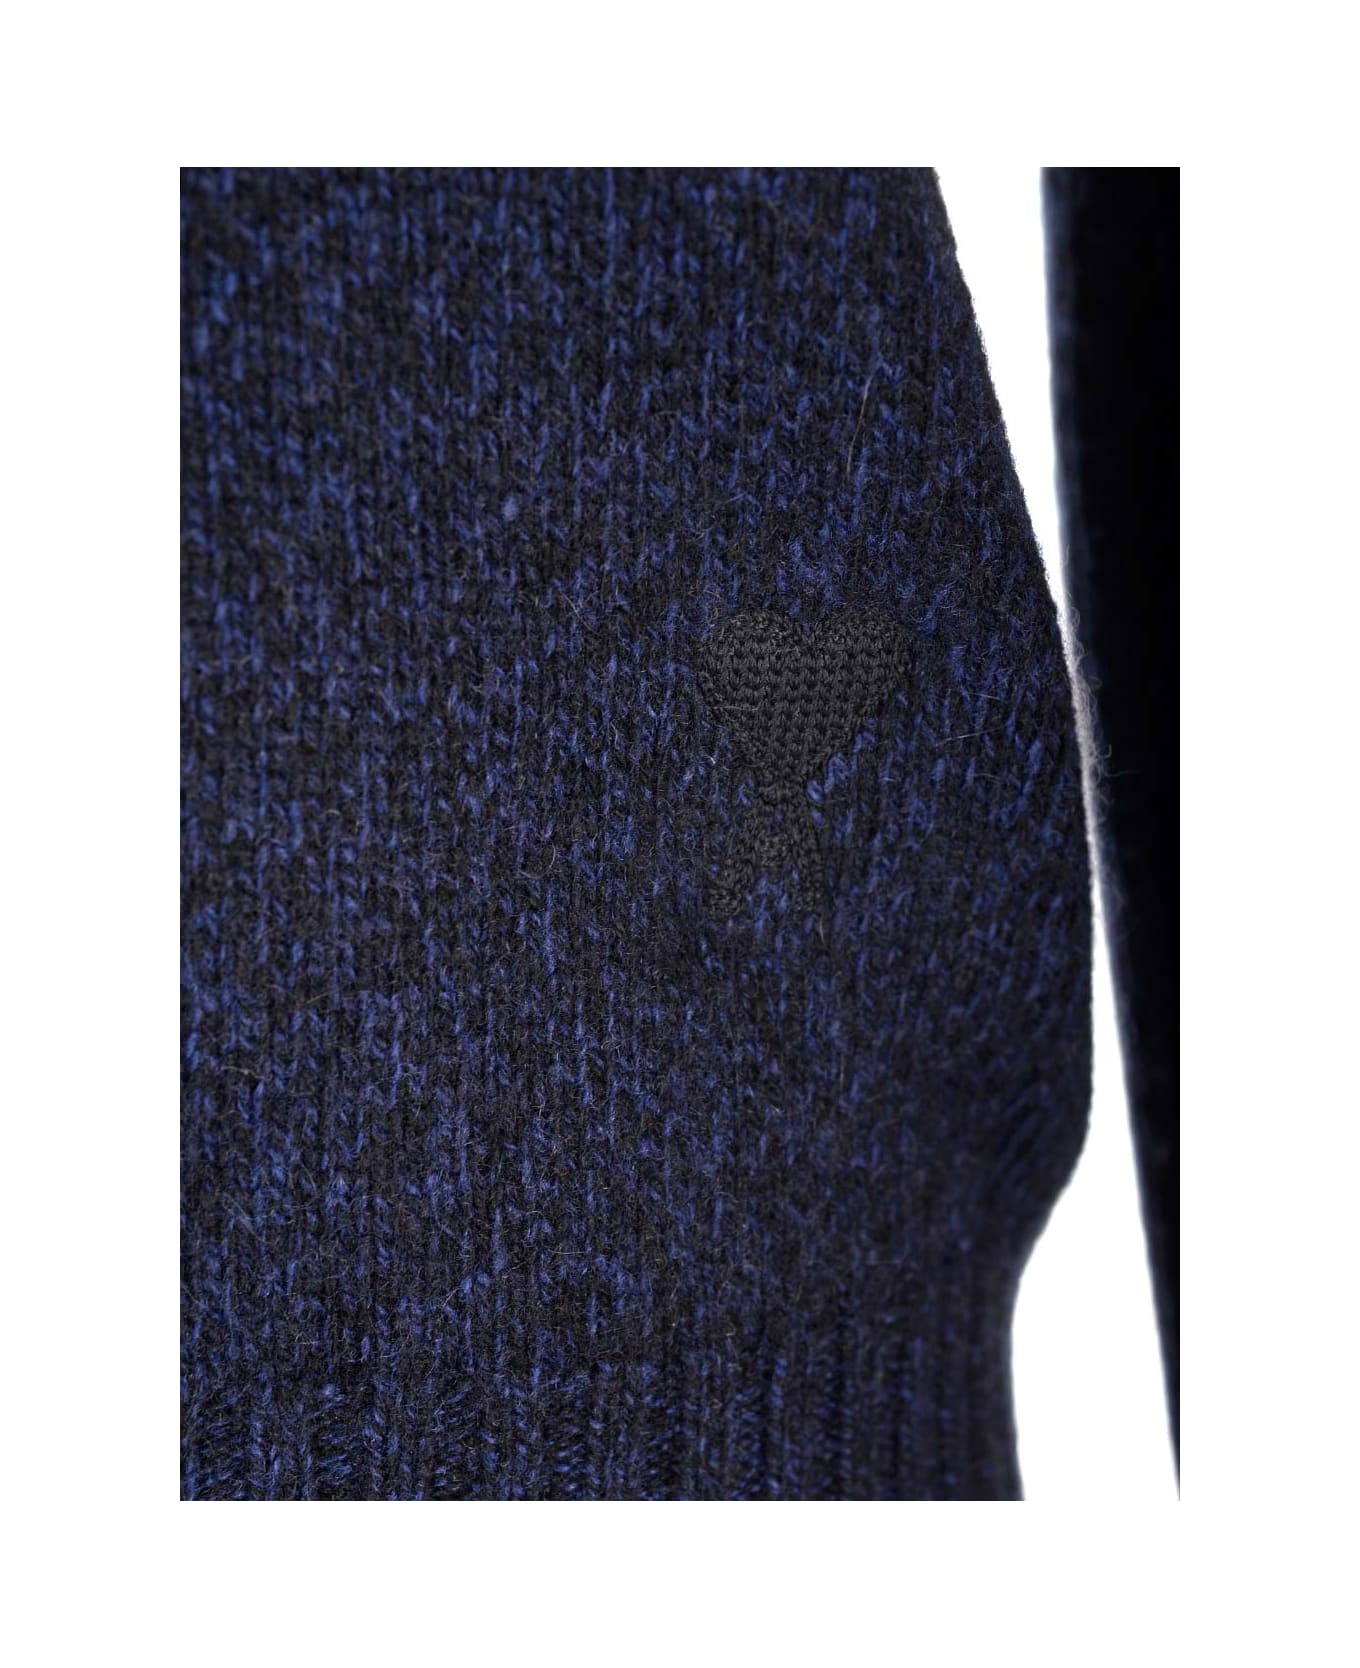 Ami Alexandre Mattiussi Blue Cashmere And Wool Sweater - Blue